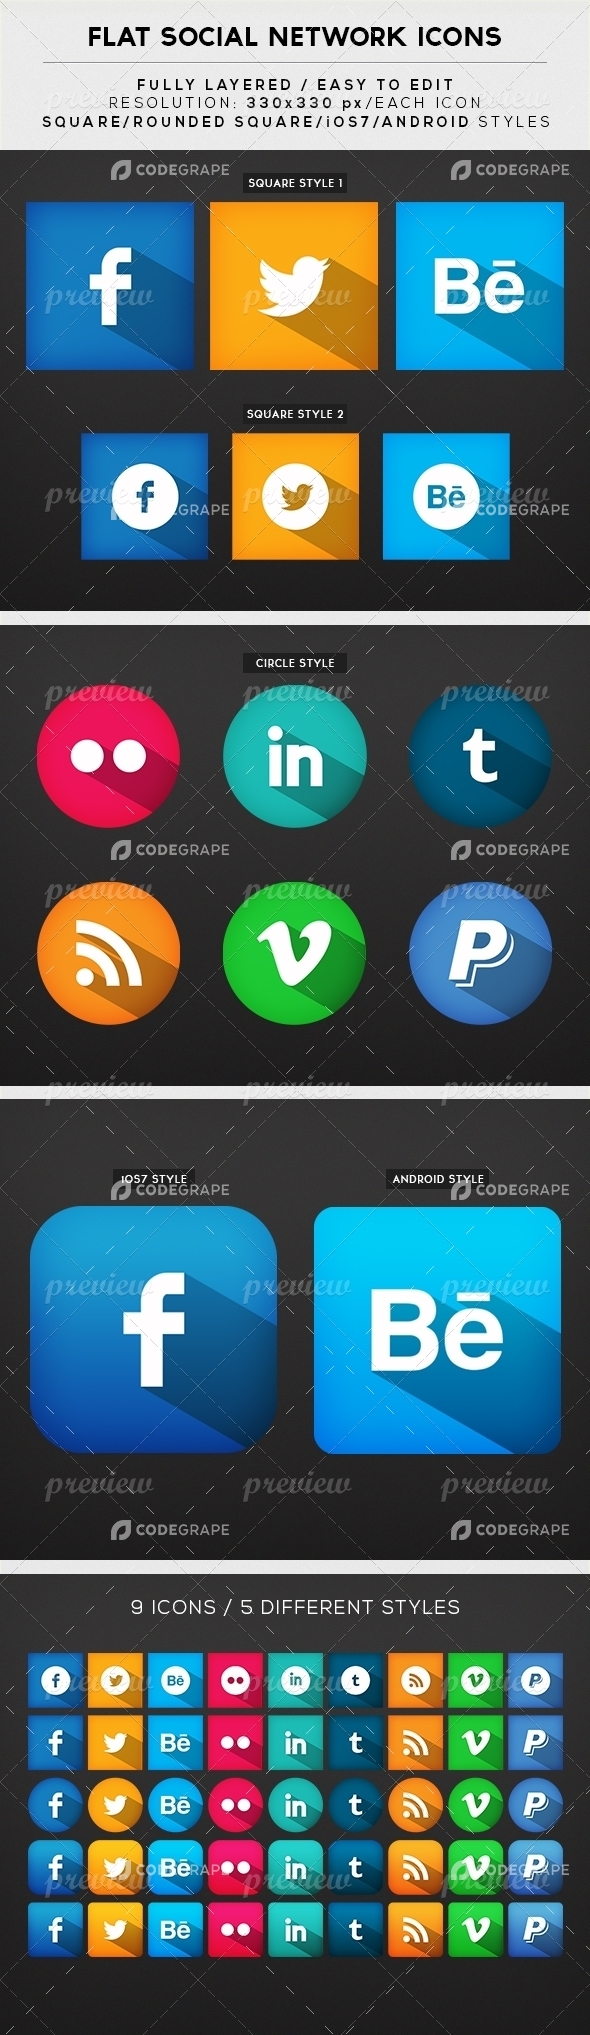 Flat Social Network Icons